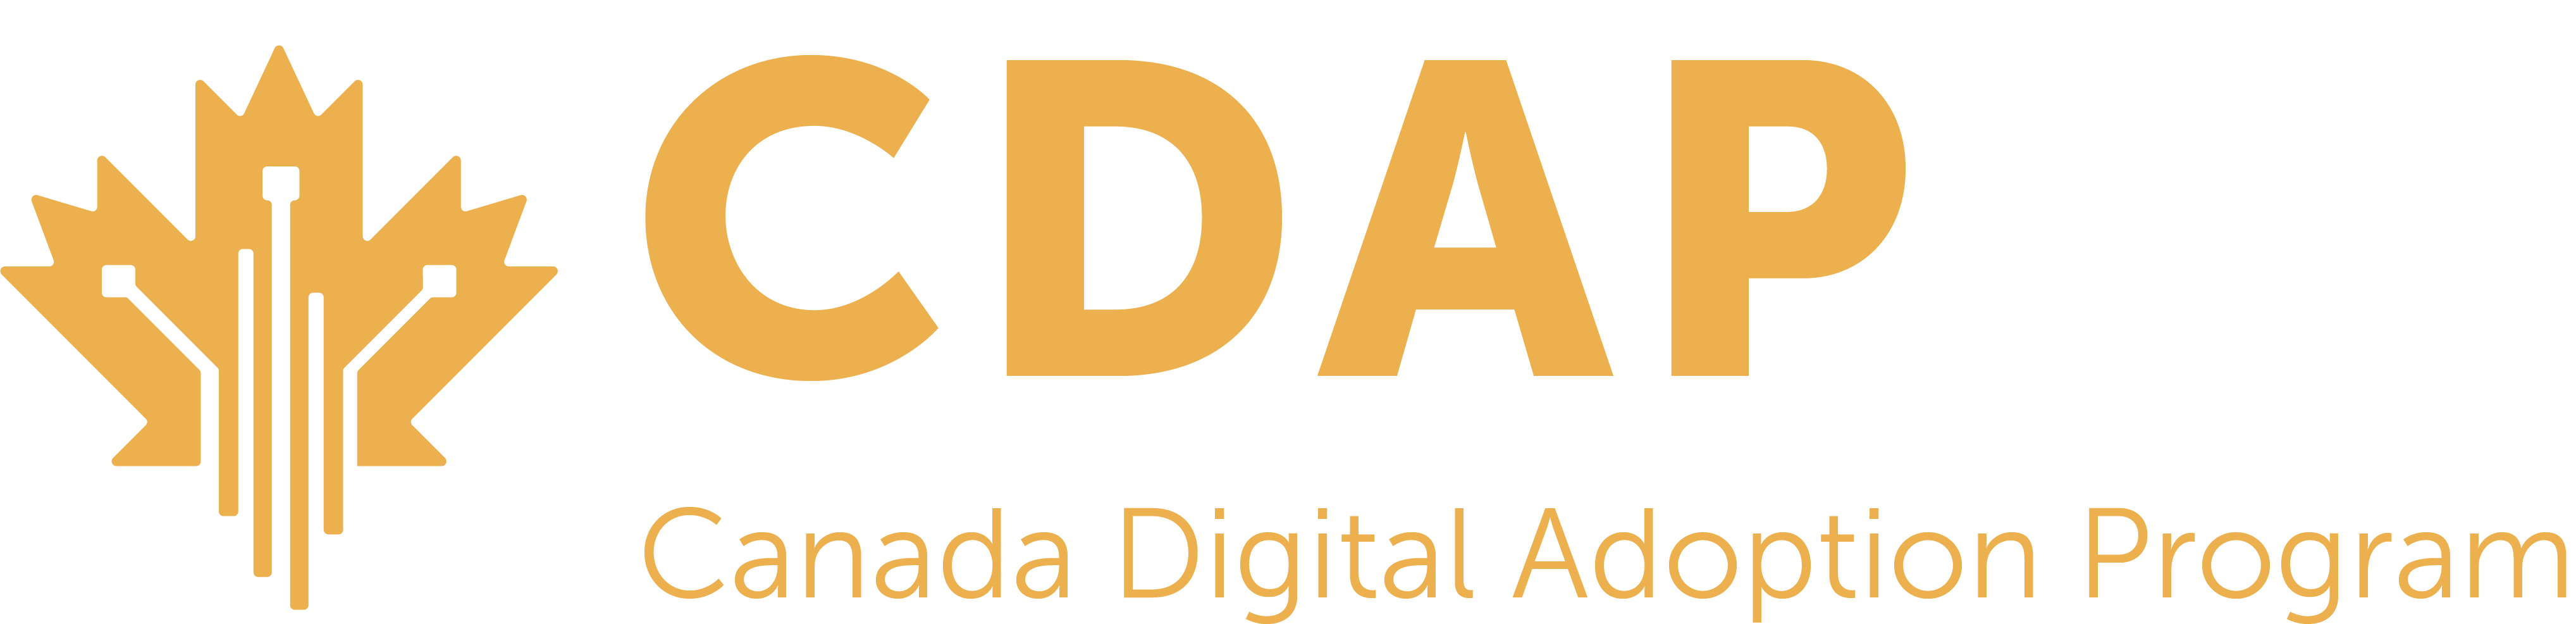 Canada Digital Adoption Program (CDAP) — Panda Rose Consulting Studios, Inc.